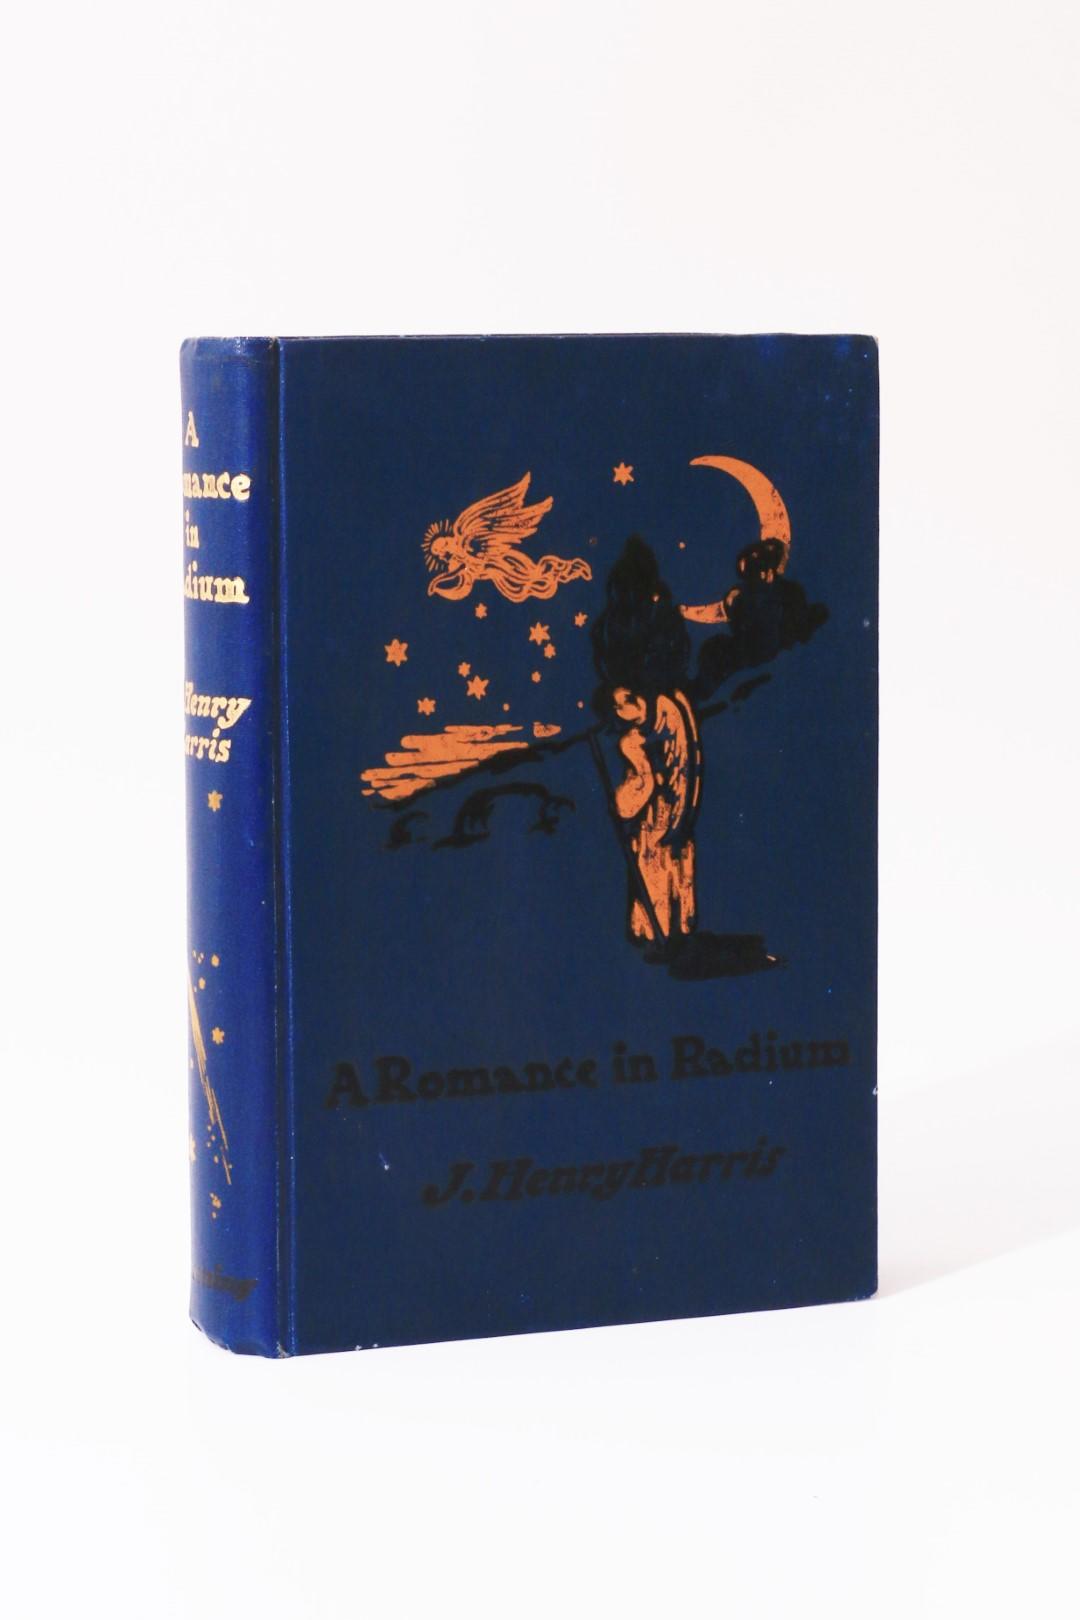 Harris J. Henry - A Romance in Radium - Greening, 1906, First Edition.